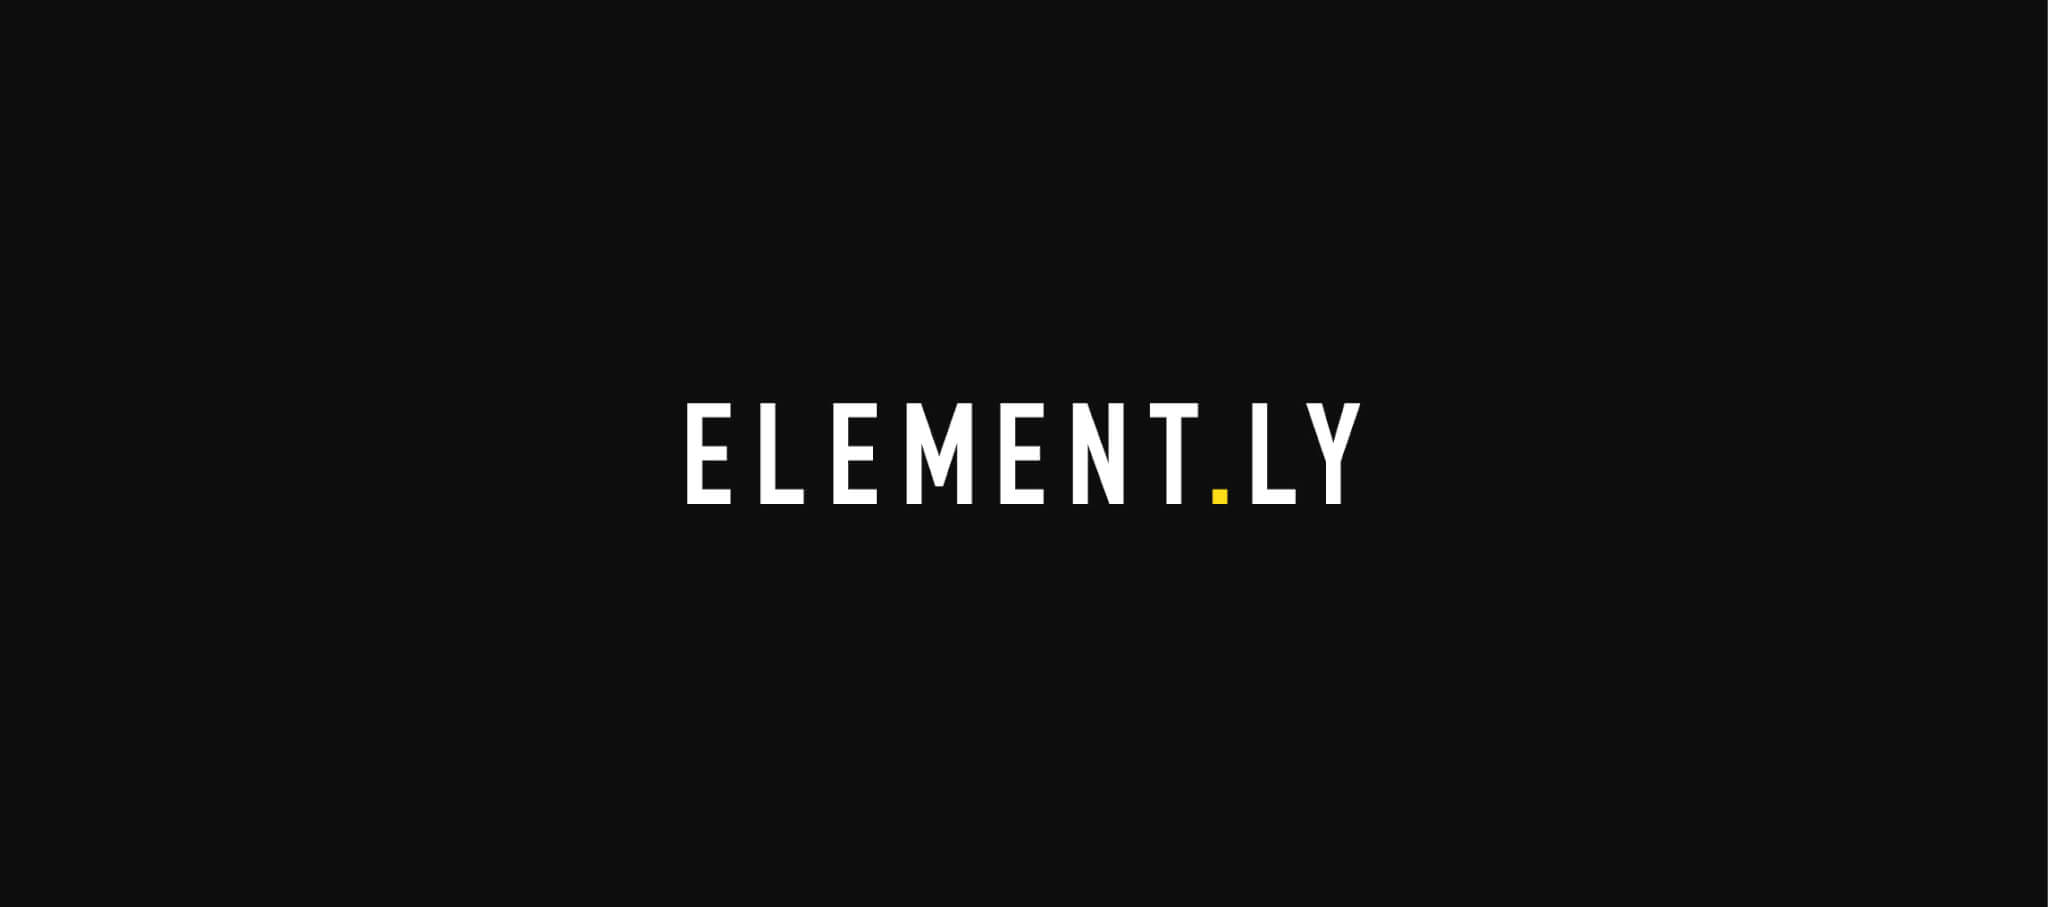 elemently_slideshow-05